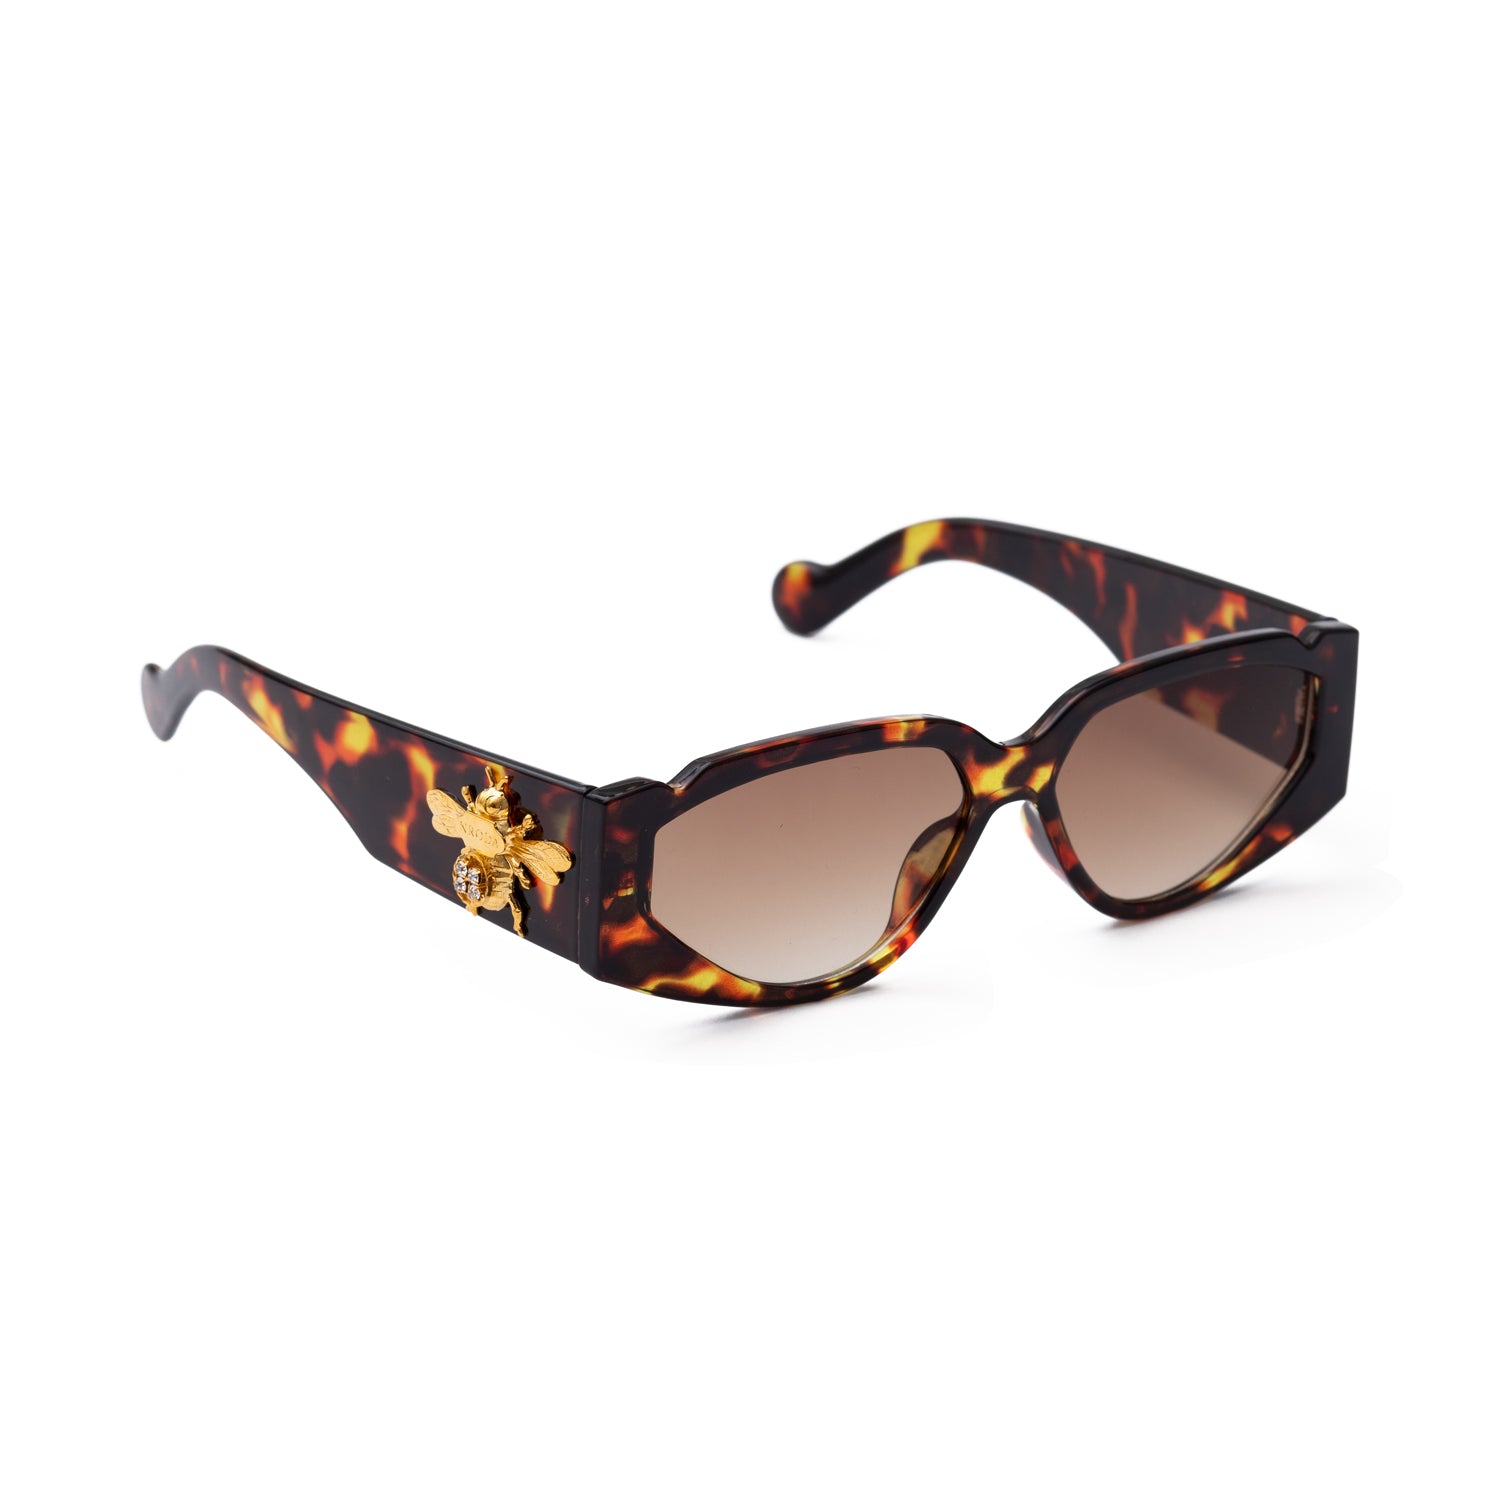 Nroda Gianni Love Bee Cocoa Brown Eyewear Sunglasses Collection, Tnemnroda man- NRODA